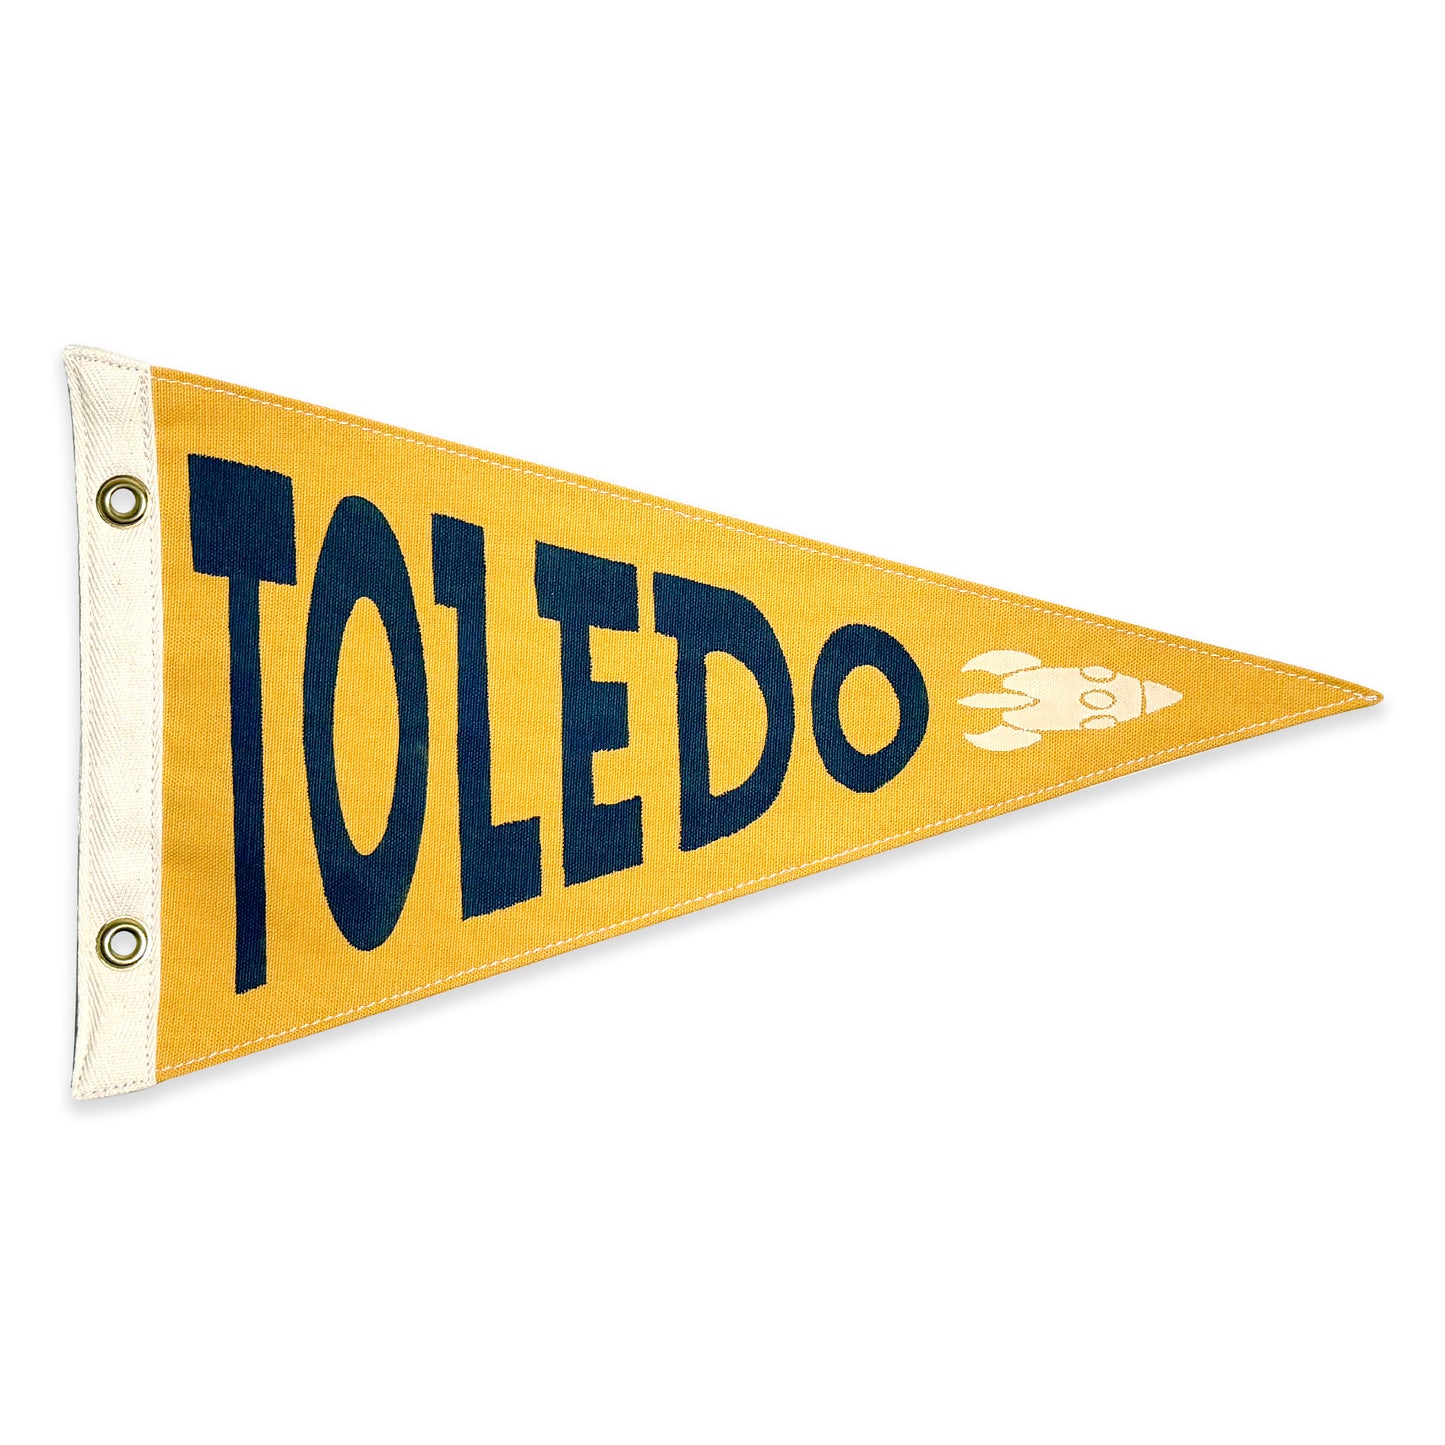 Toldeo Vintage-Inspired Pennant